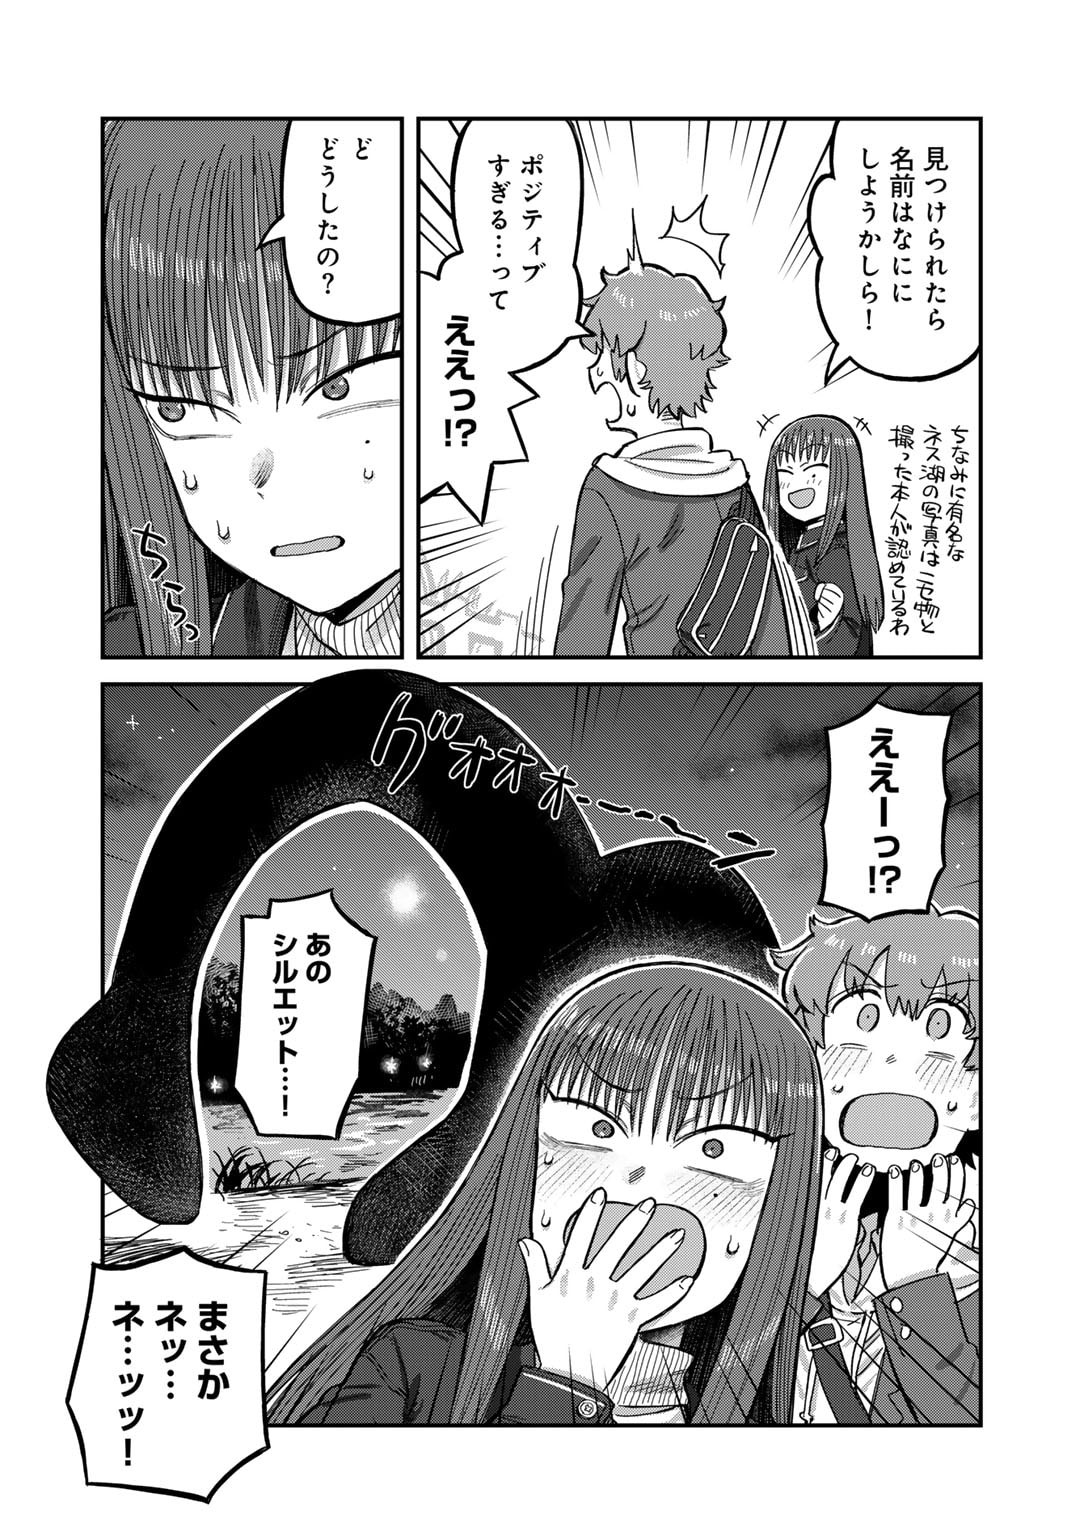 Kurono-san wa Occult ga Suki! - Chapter 5 - Page 13